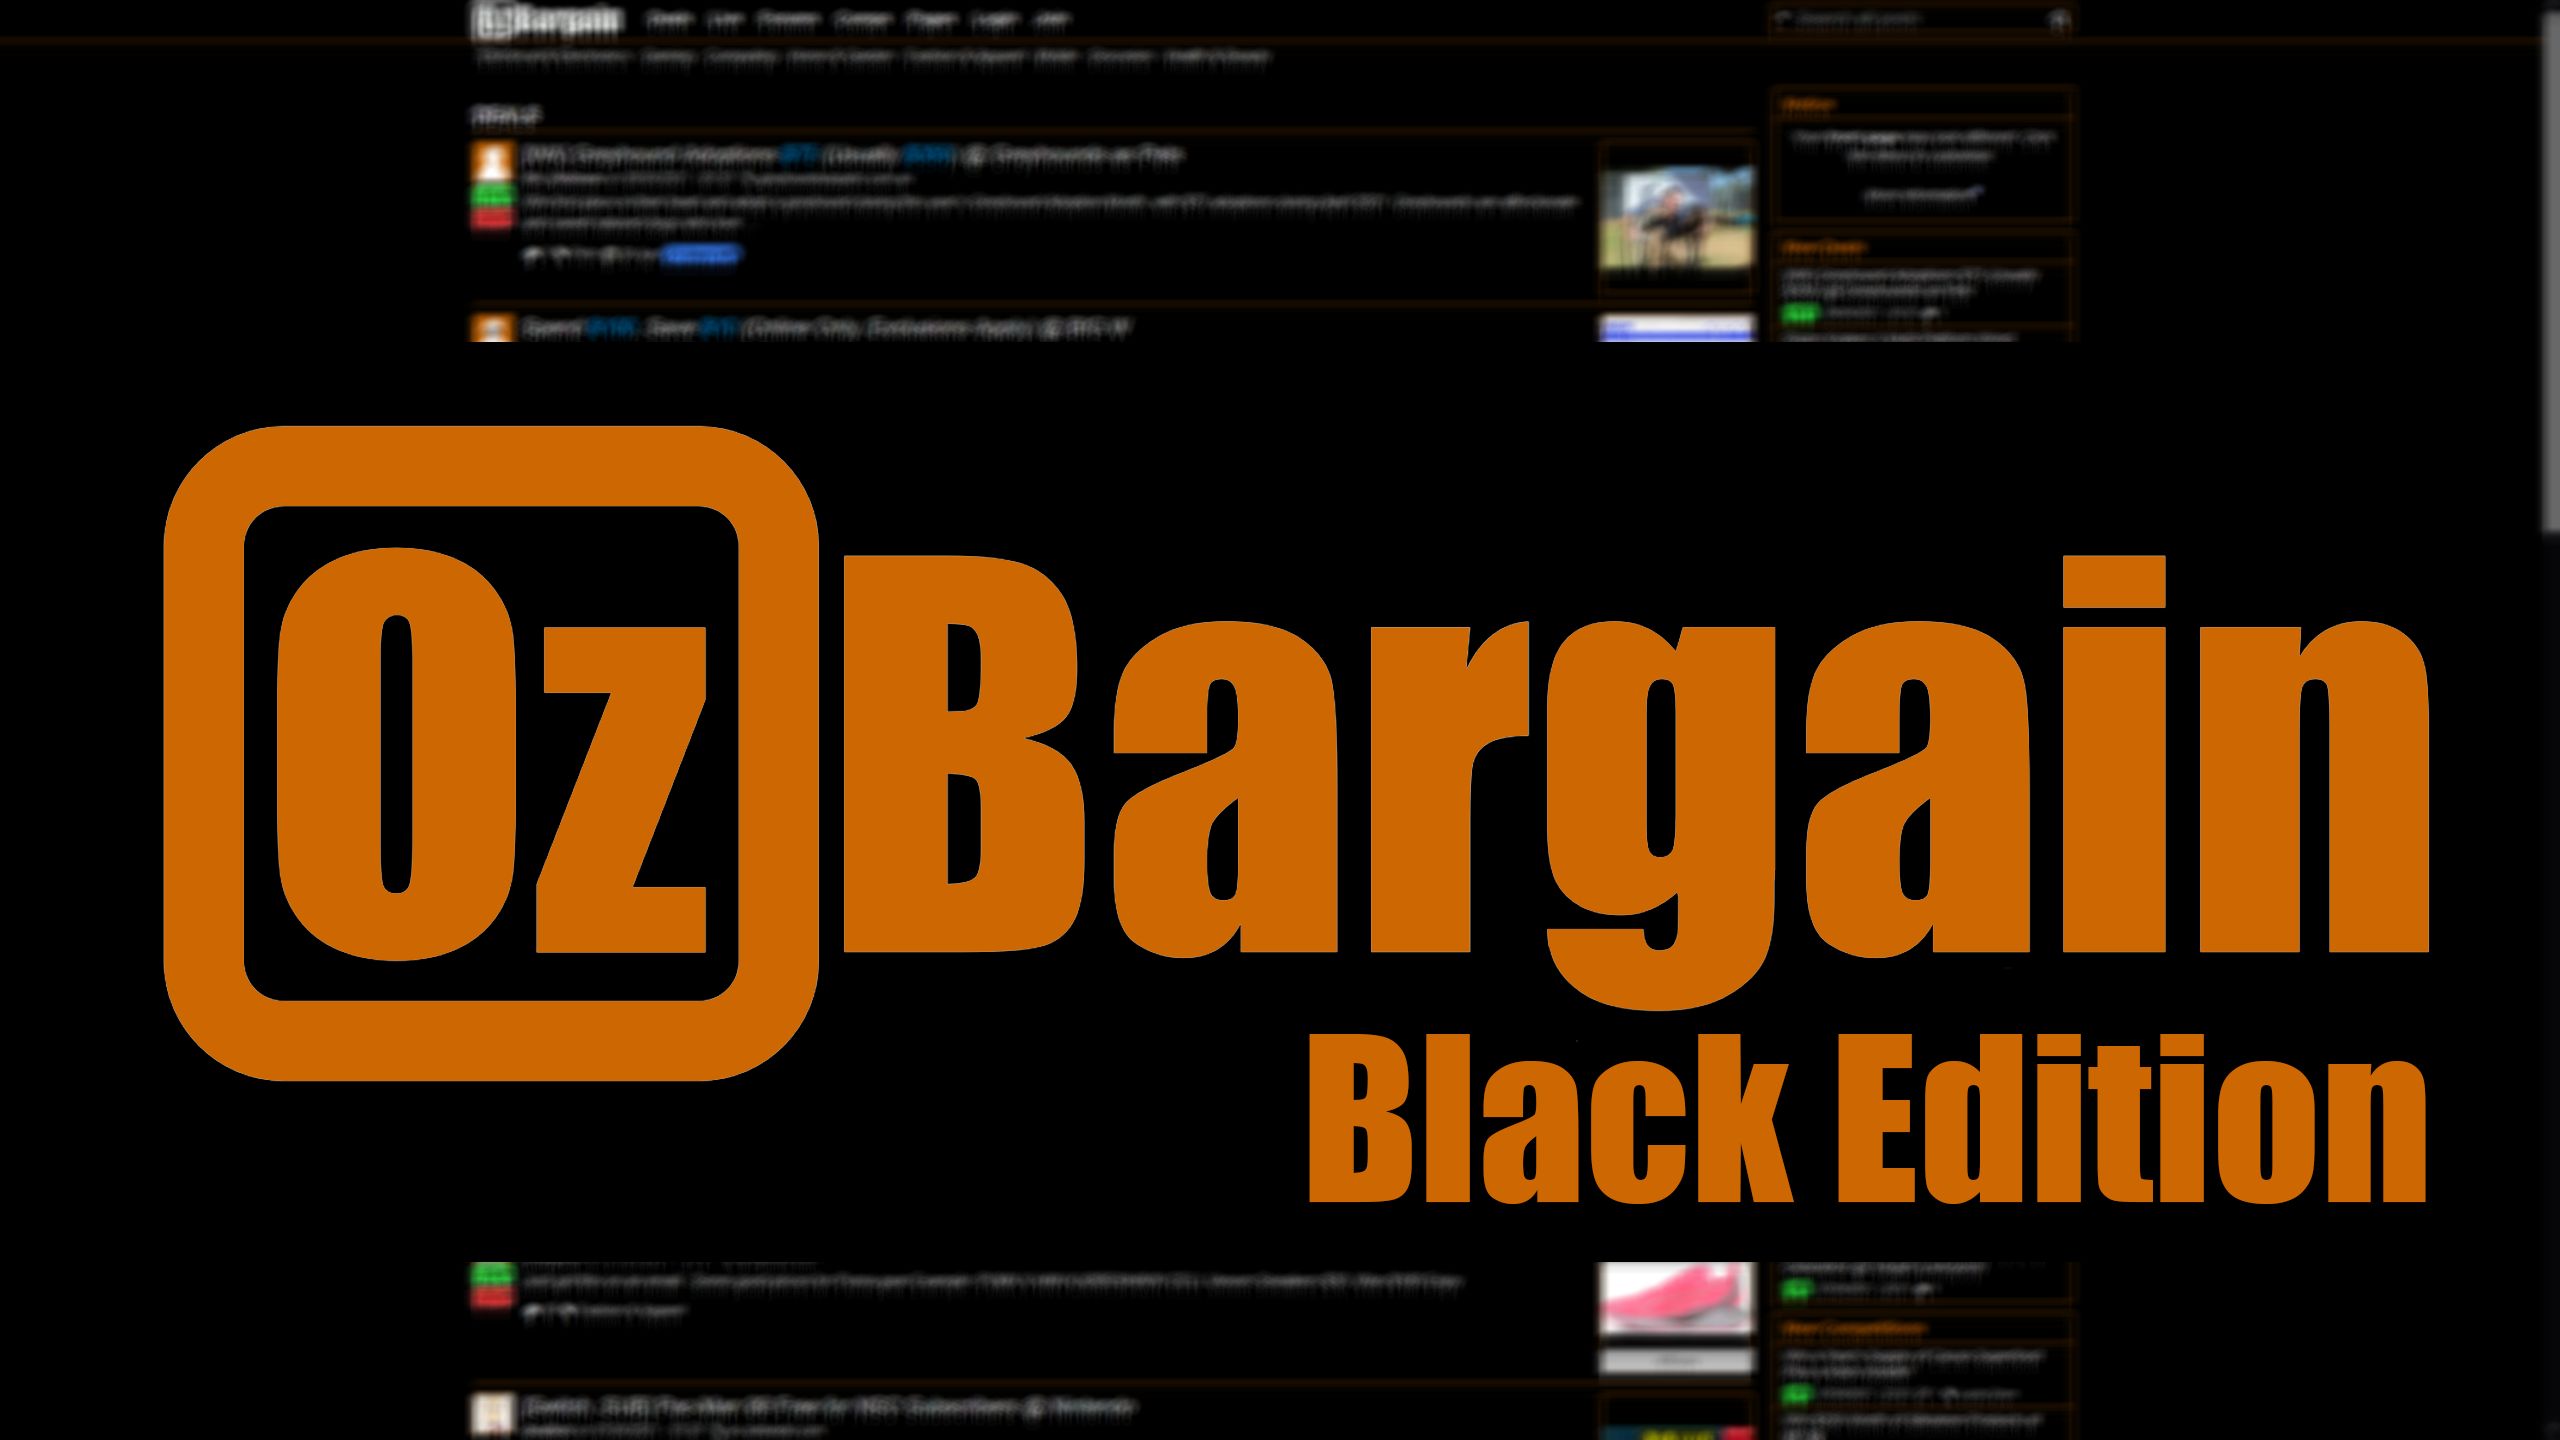 OzBargain Black Edition screenshot